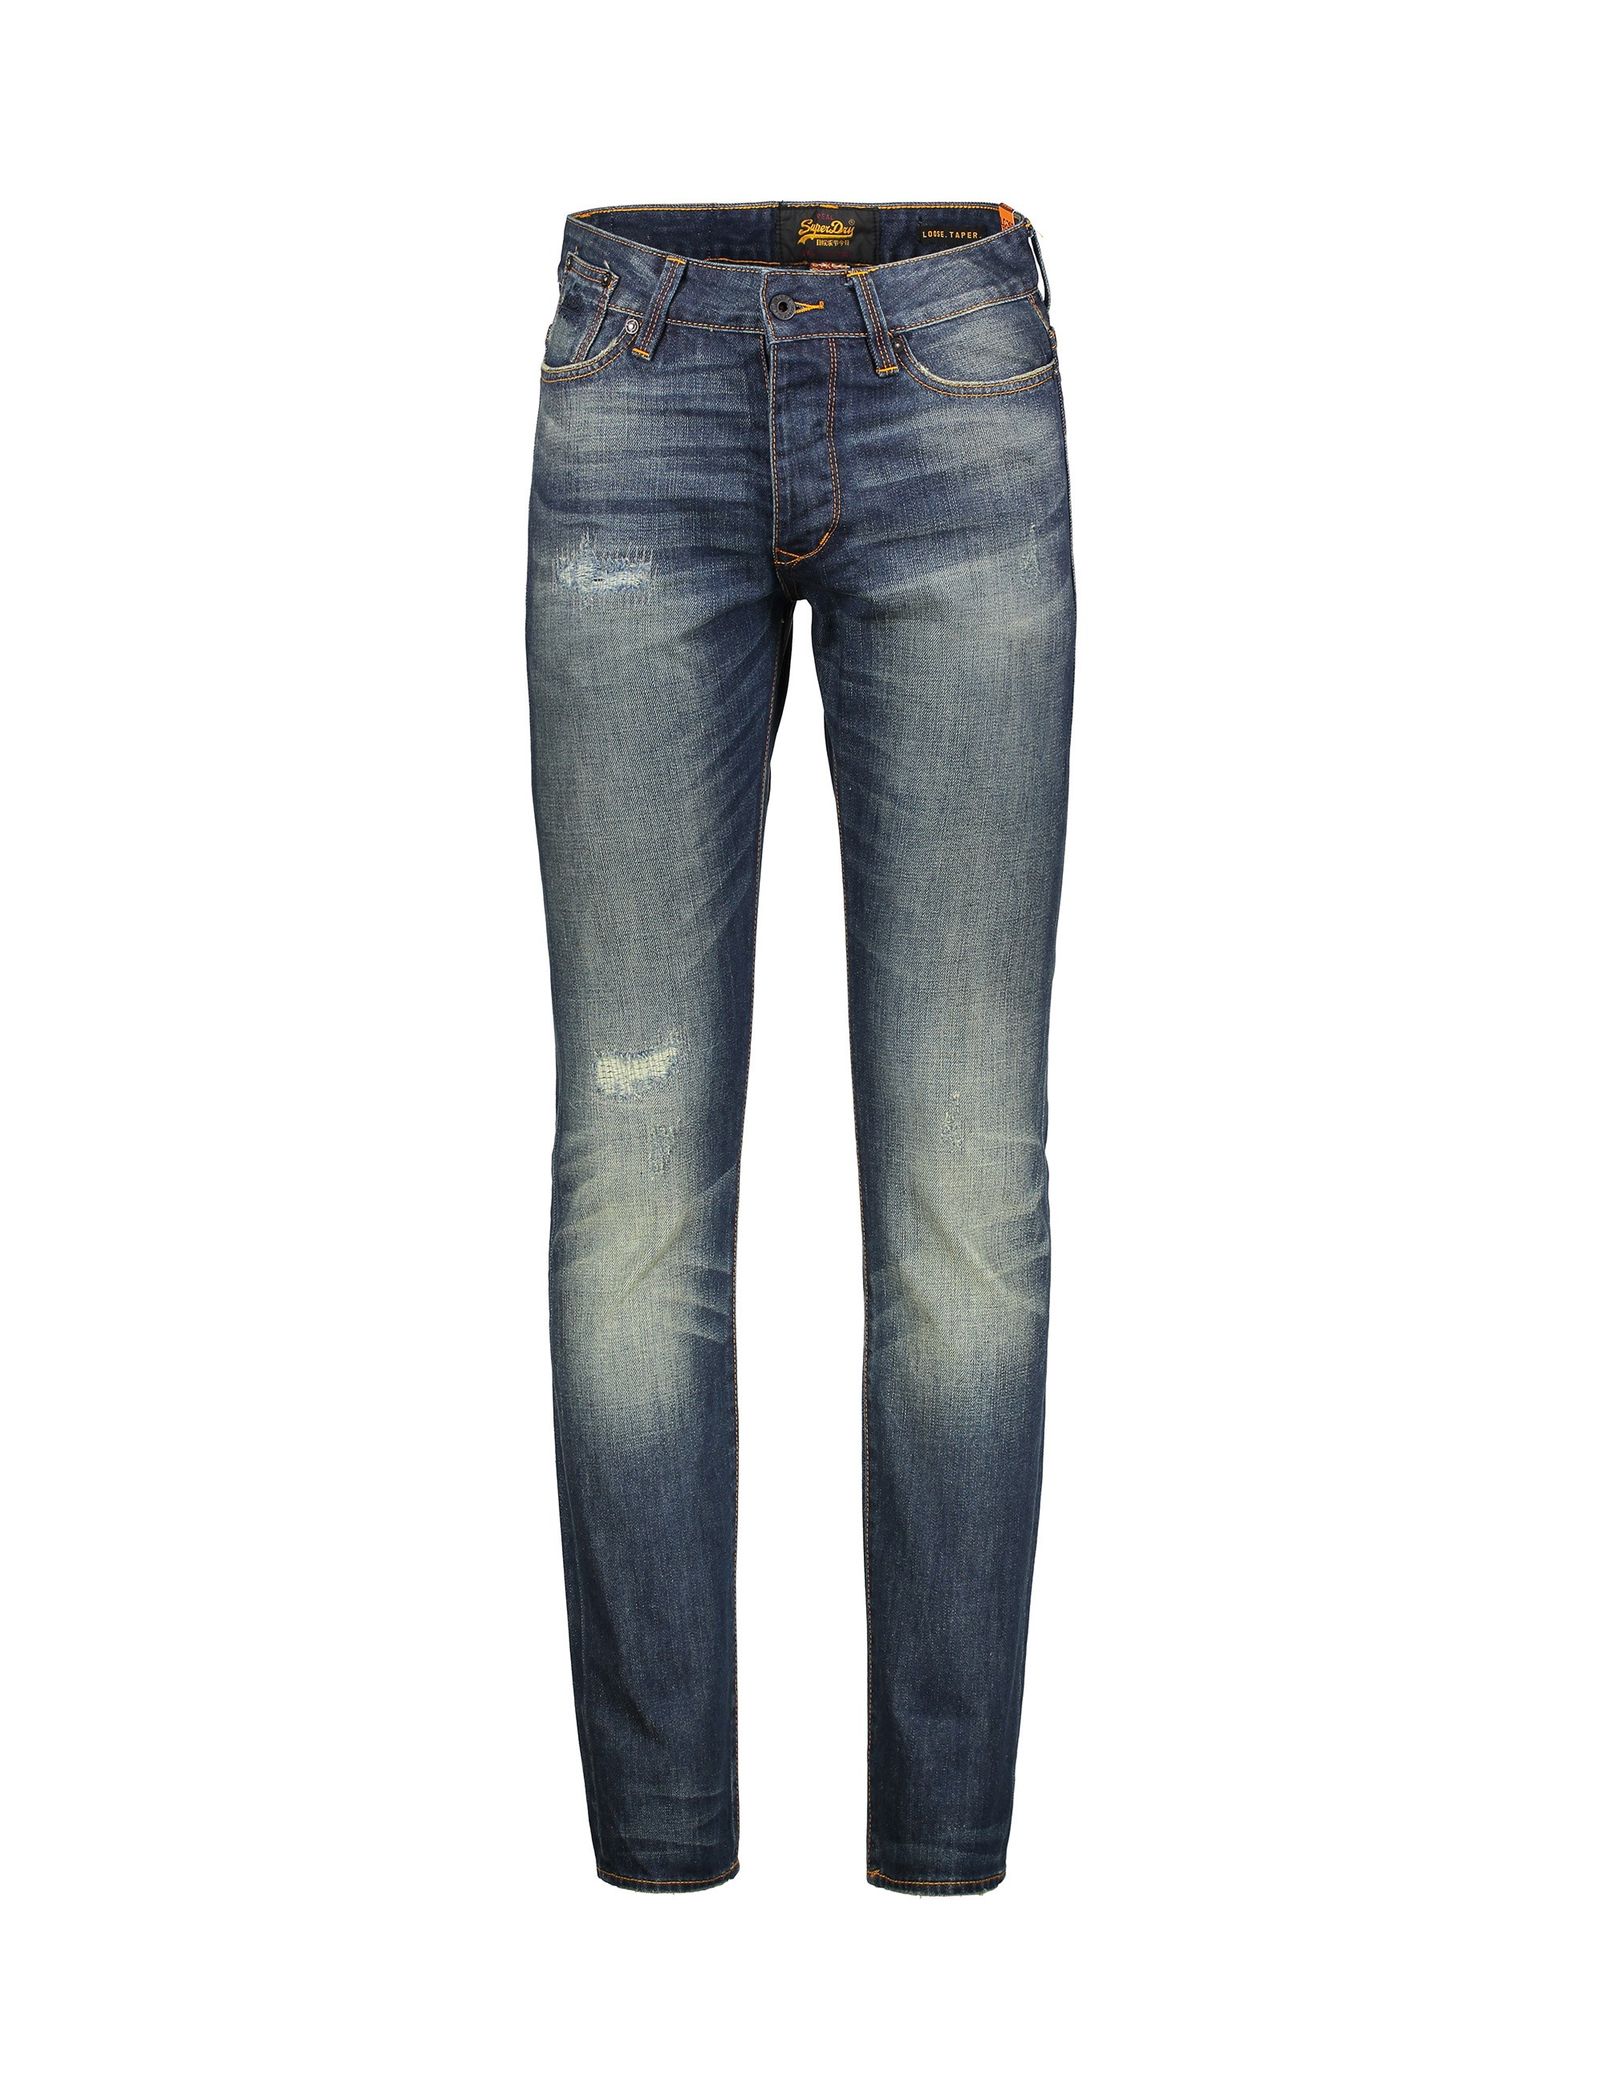 شلوار جین خمره ای مردانه Biker Tapered Jeans - سوپردرای - آبي تيره - 2